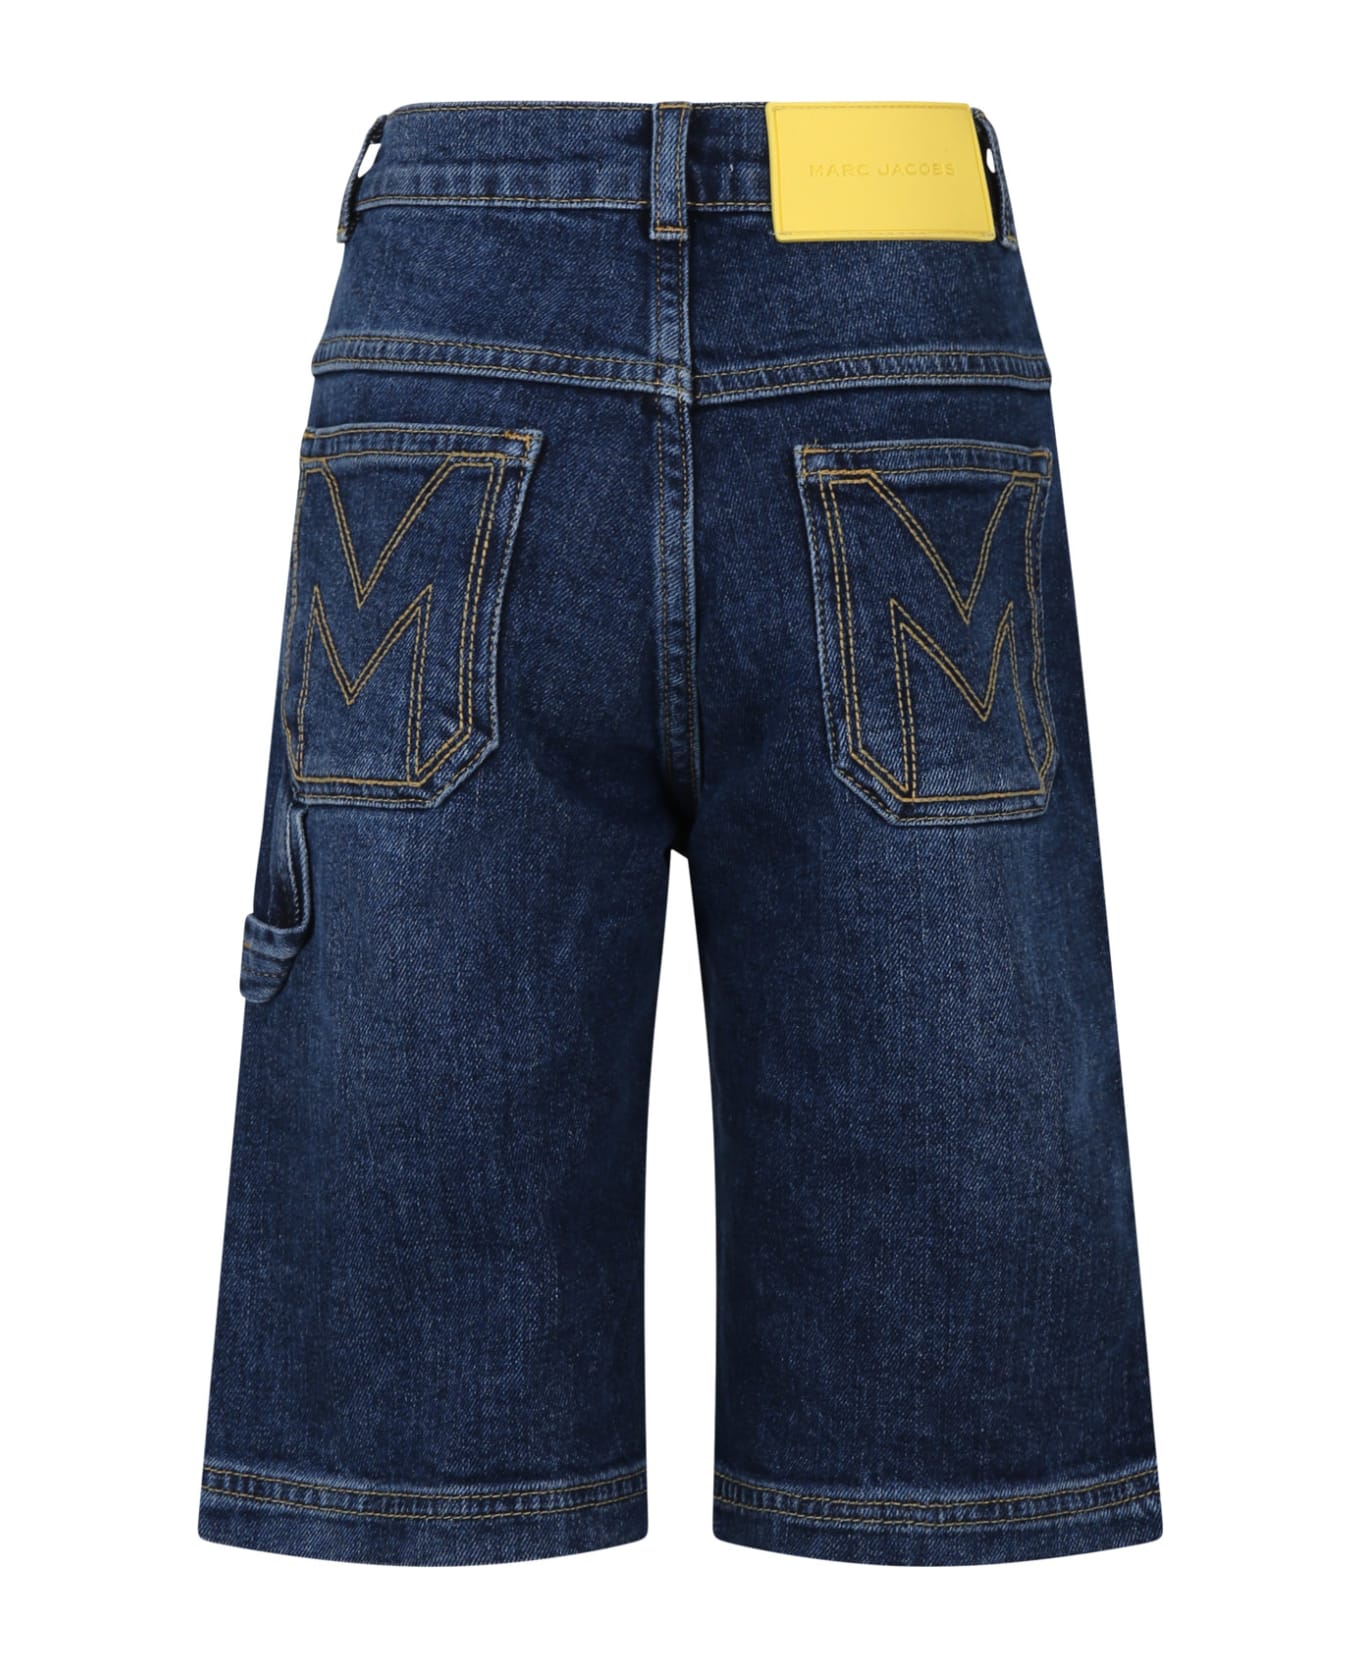 Marc Jacobs Denim Shorts For Boy With Logo - Denim